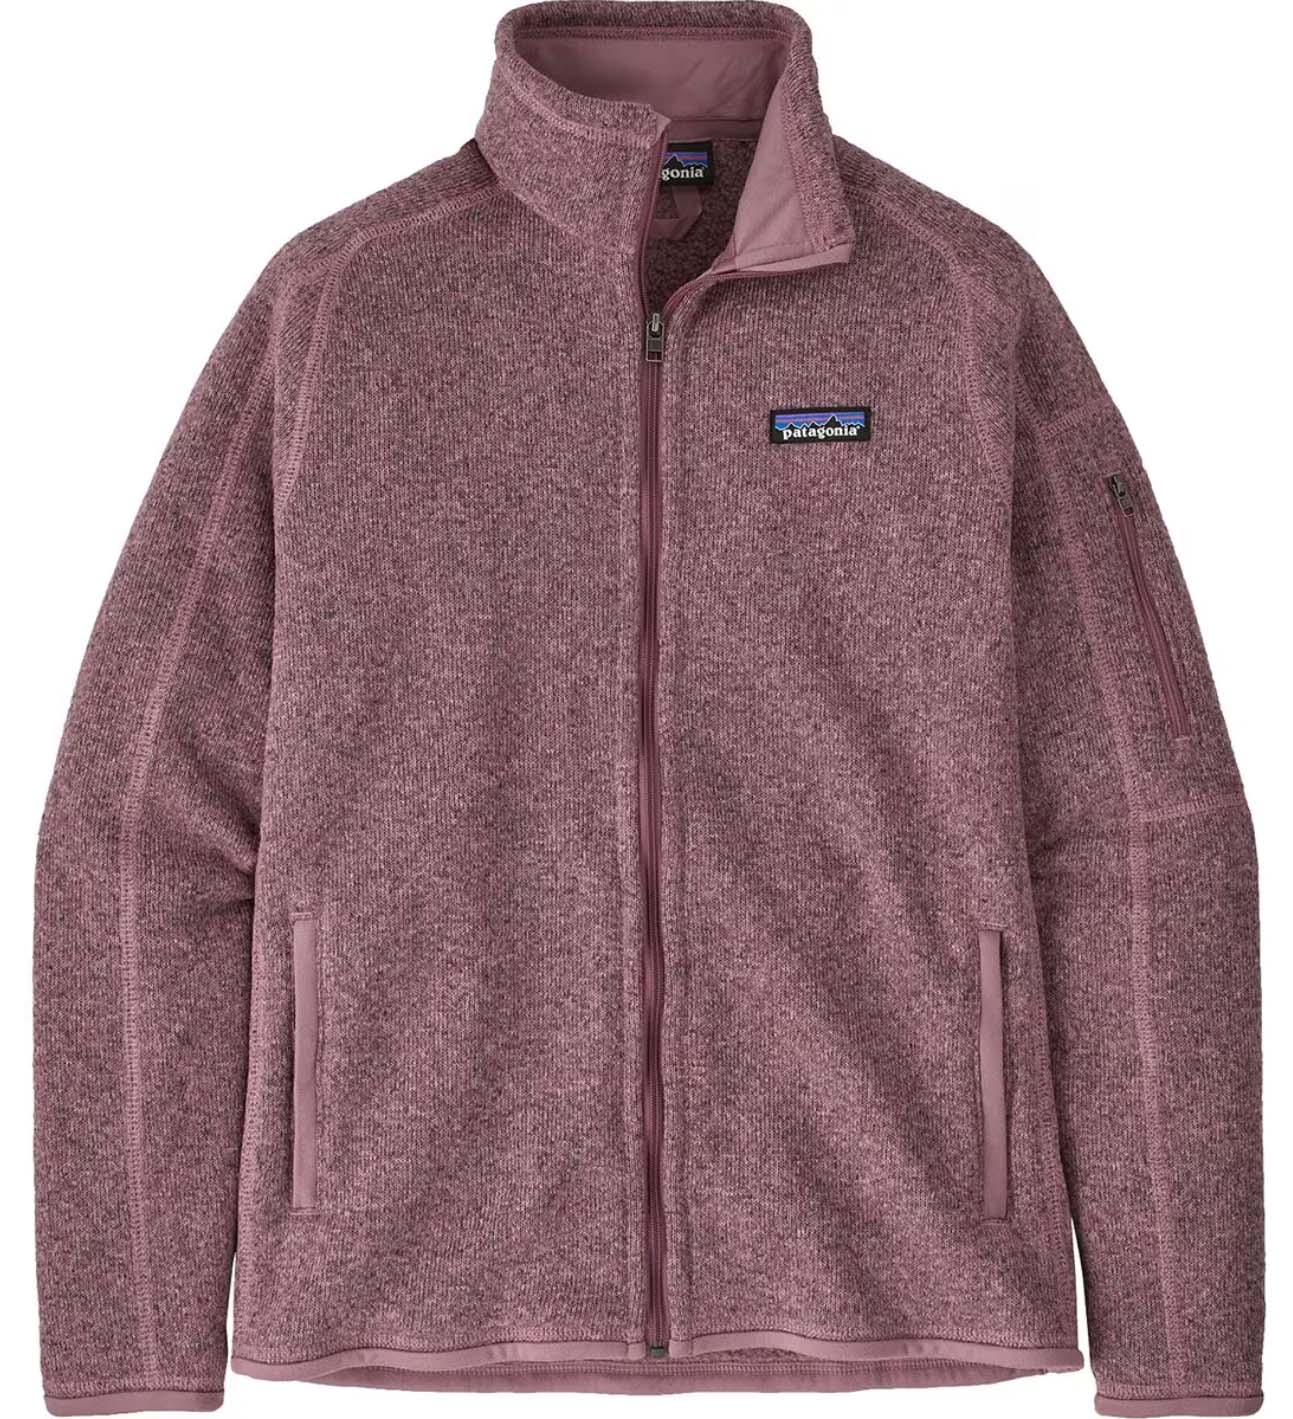 Patagonia Better Sweater fleece jacket